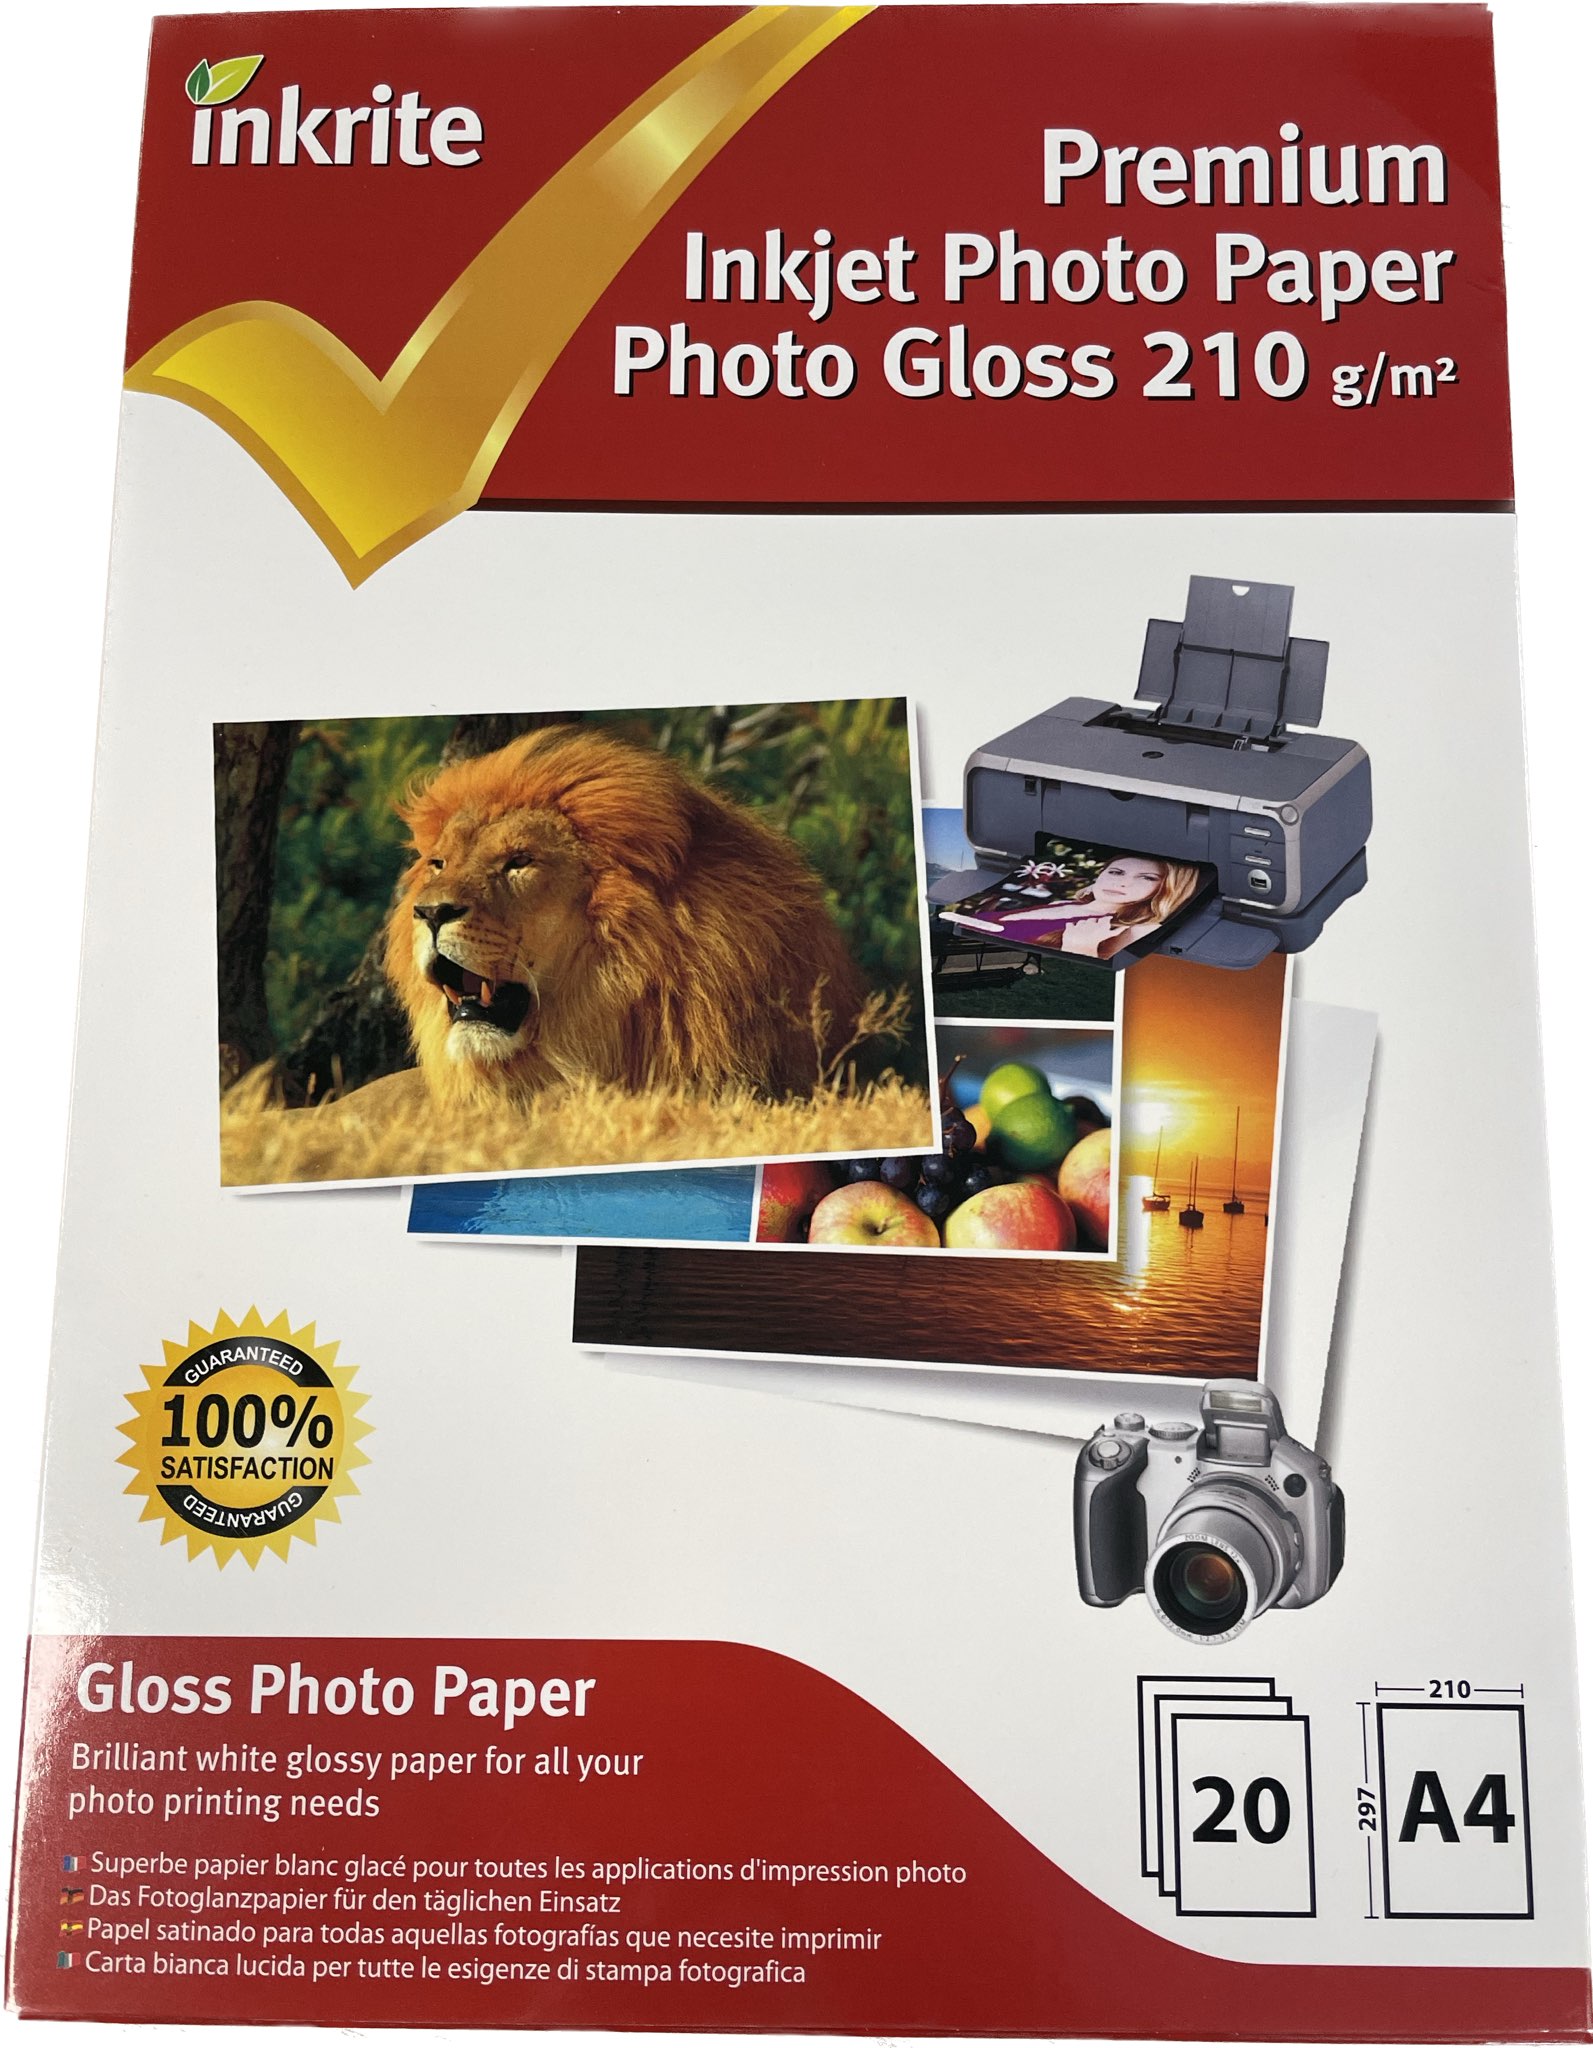 Inkrite Premium Quality Inkjet Photo Paper A4 Photo Gloss 210gsm 20 Sheets